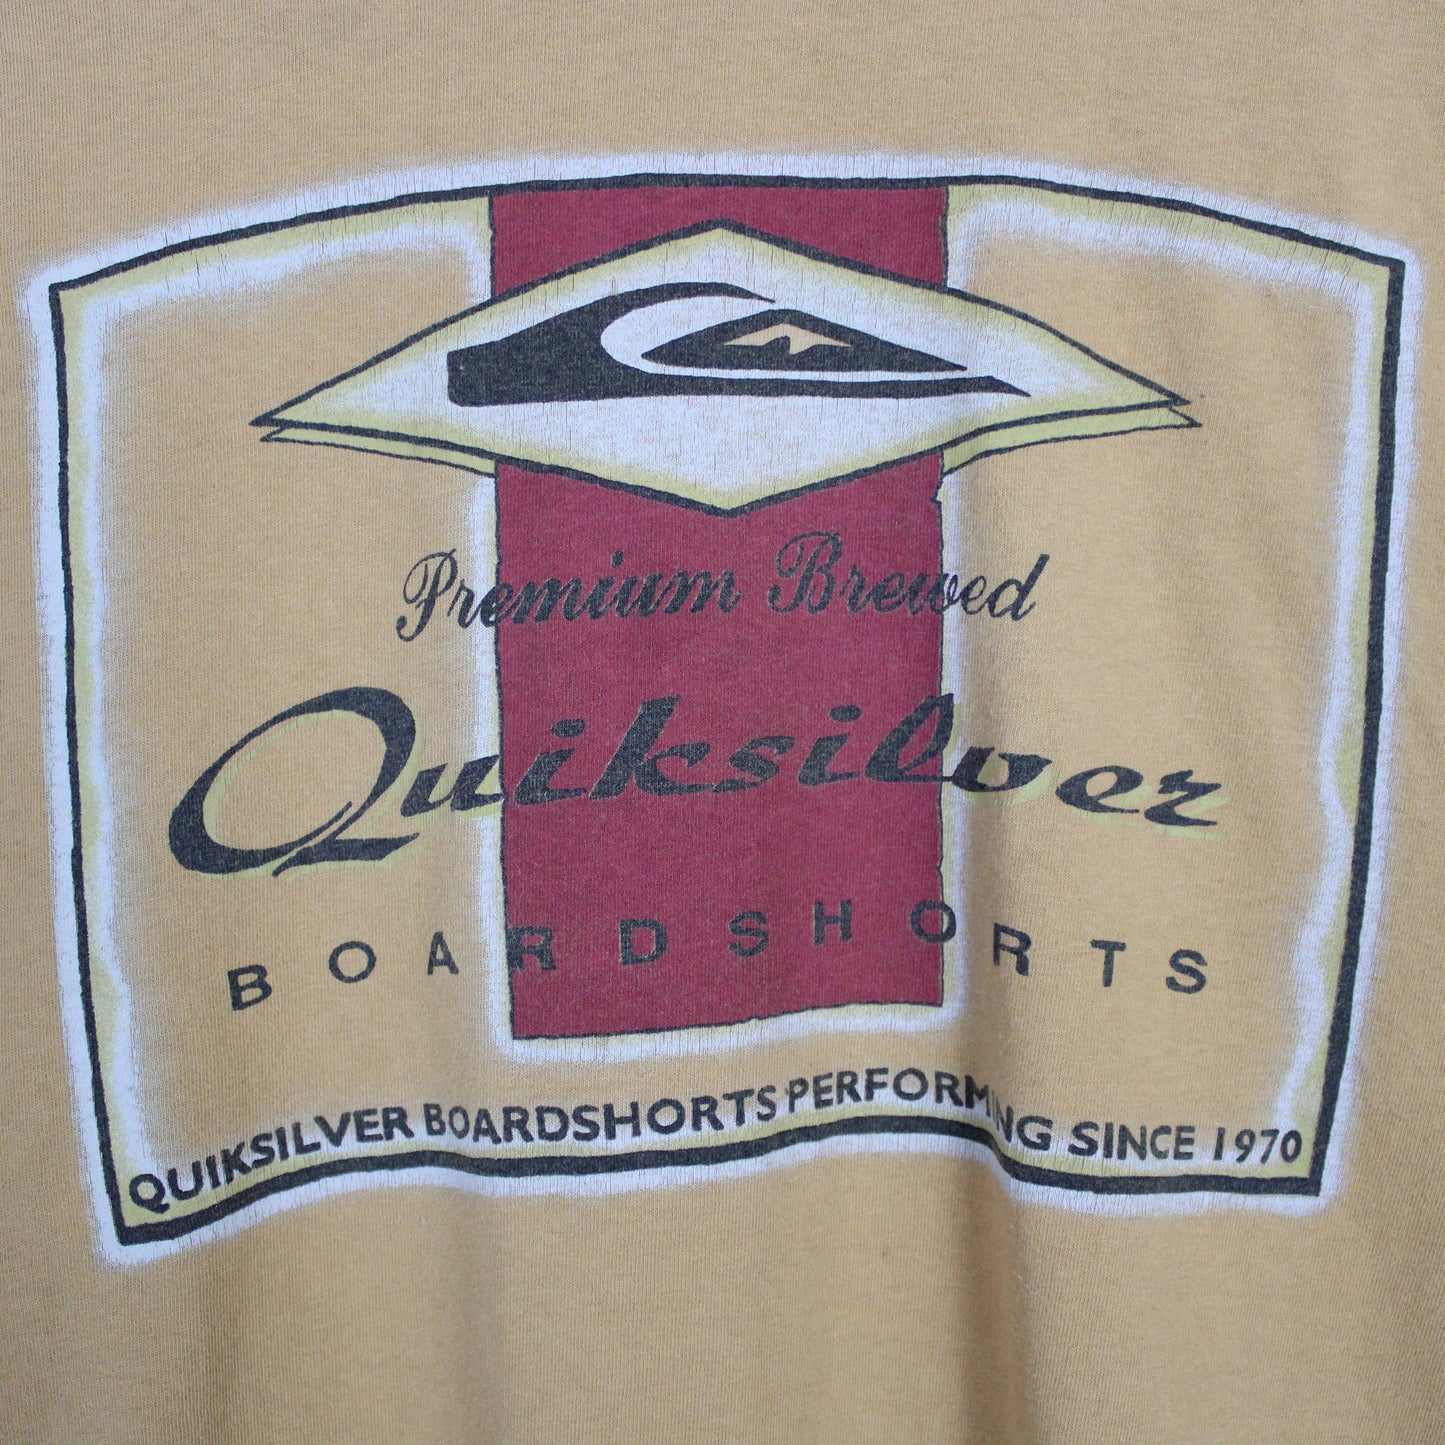 Vintage 90's Quiksilver Boardshorts Tee - XL